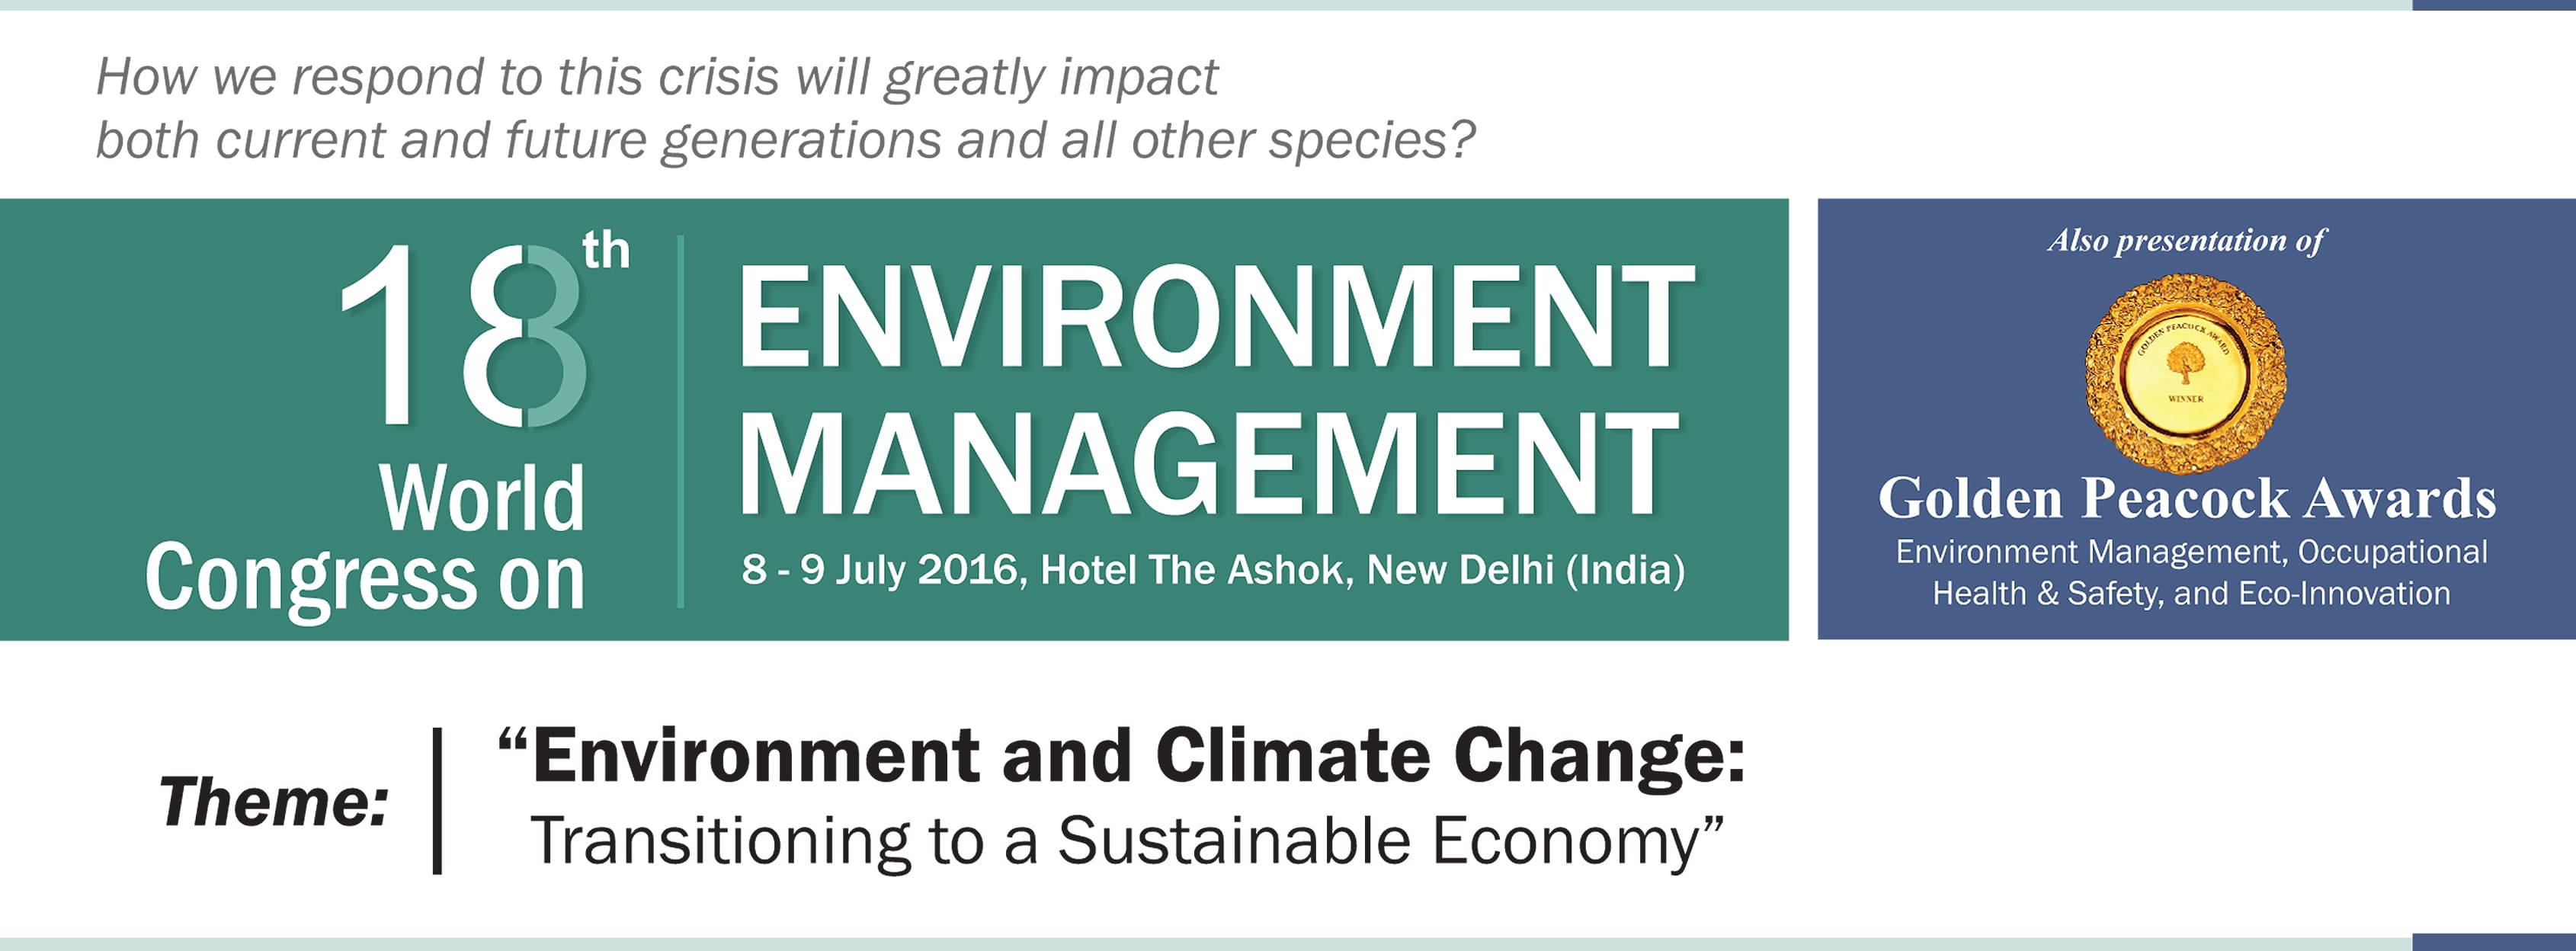 18th World Congress on Environment Management